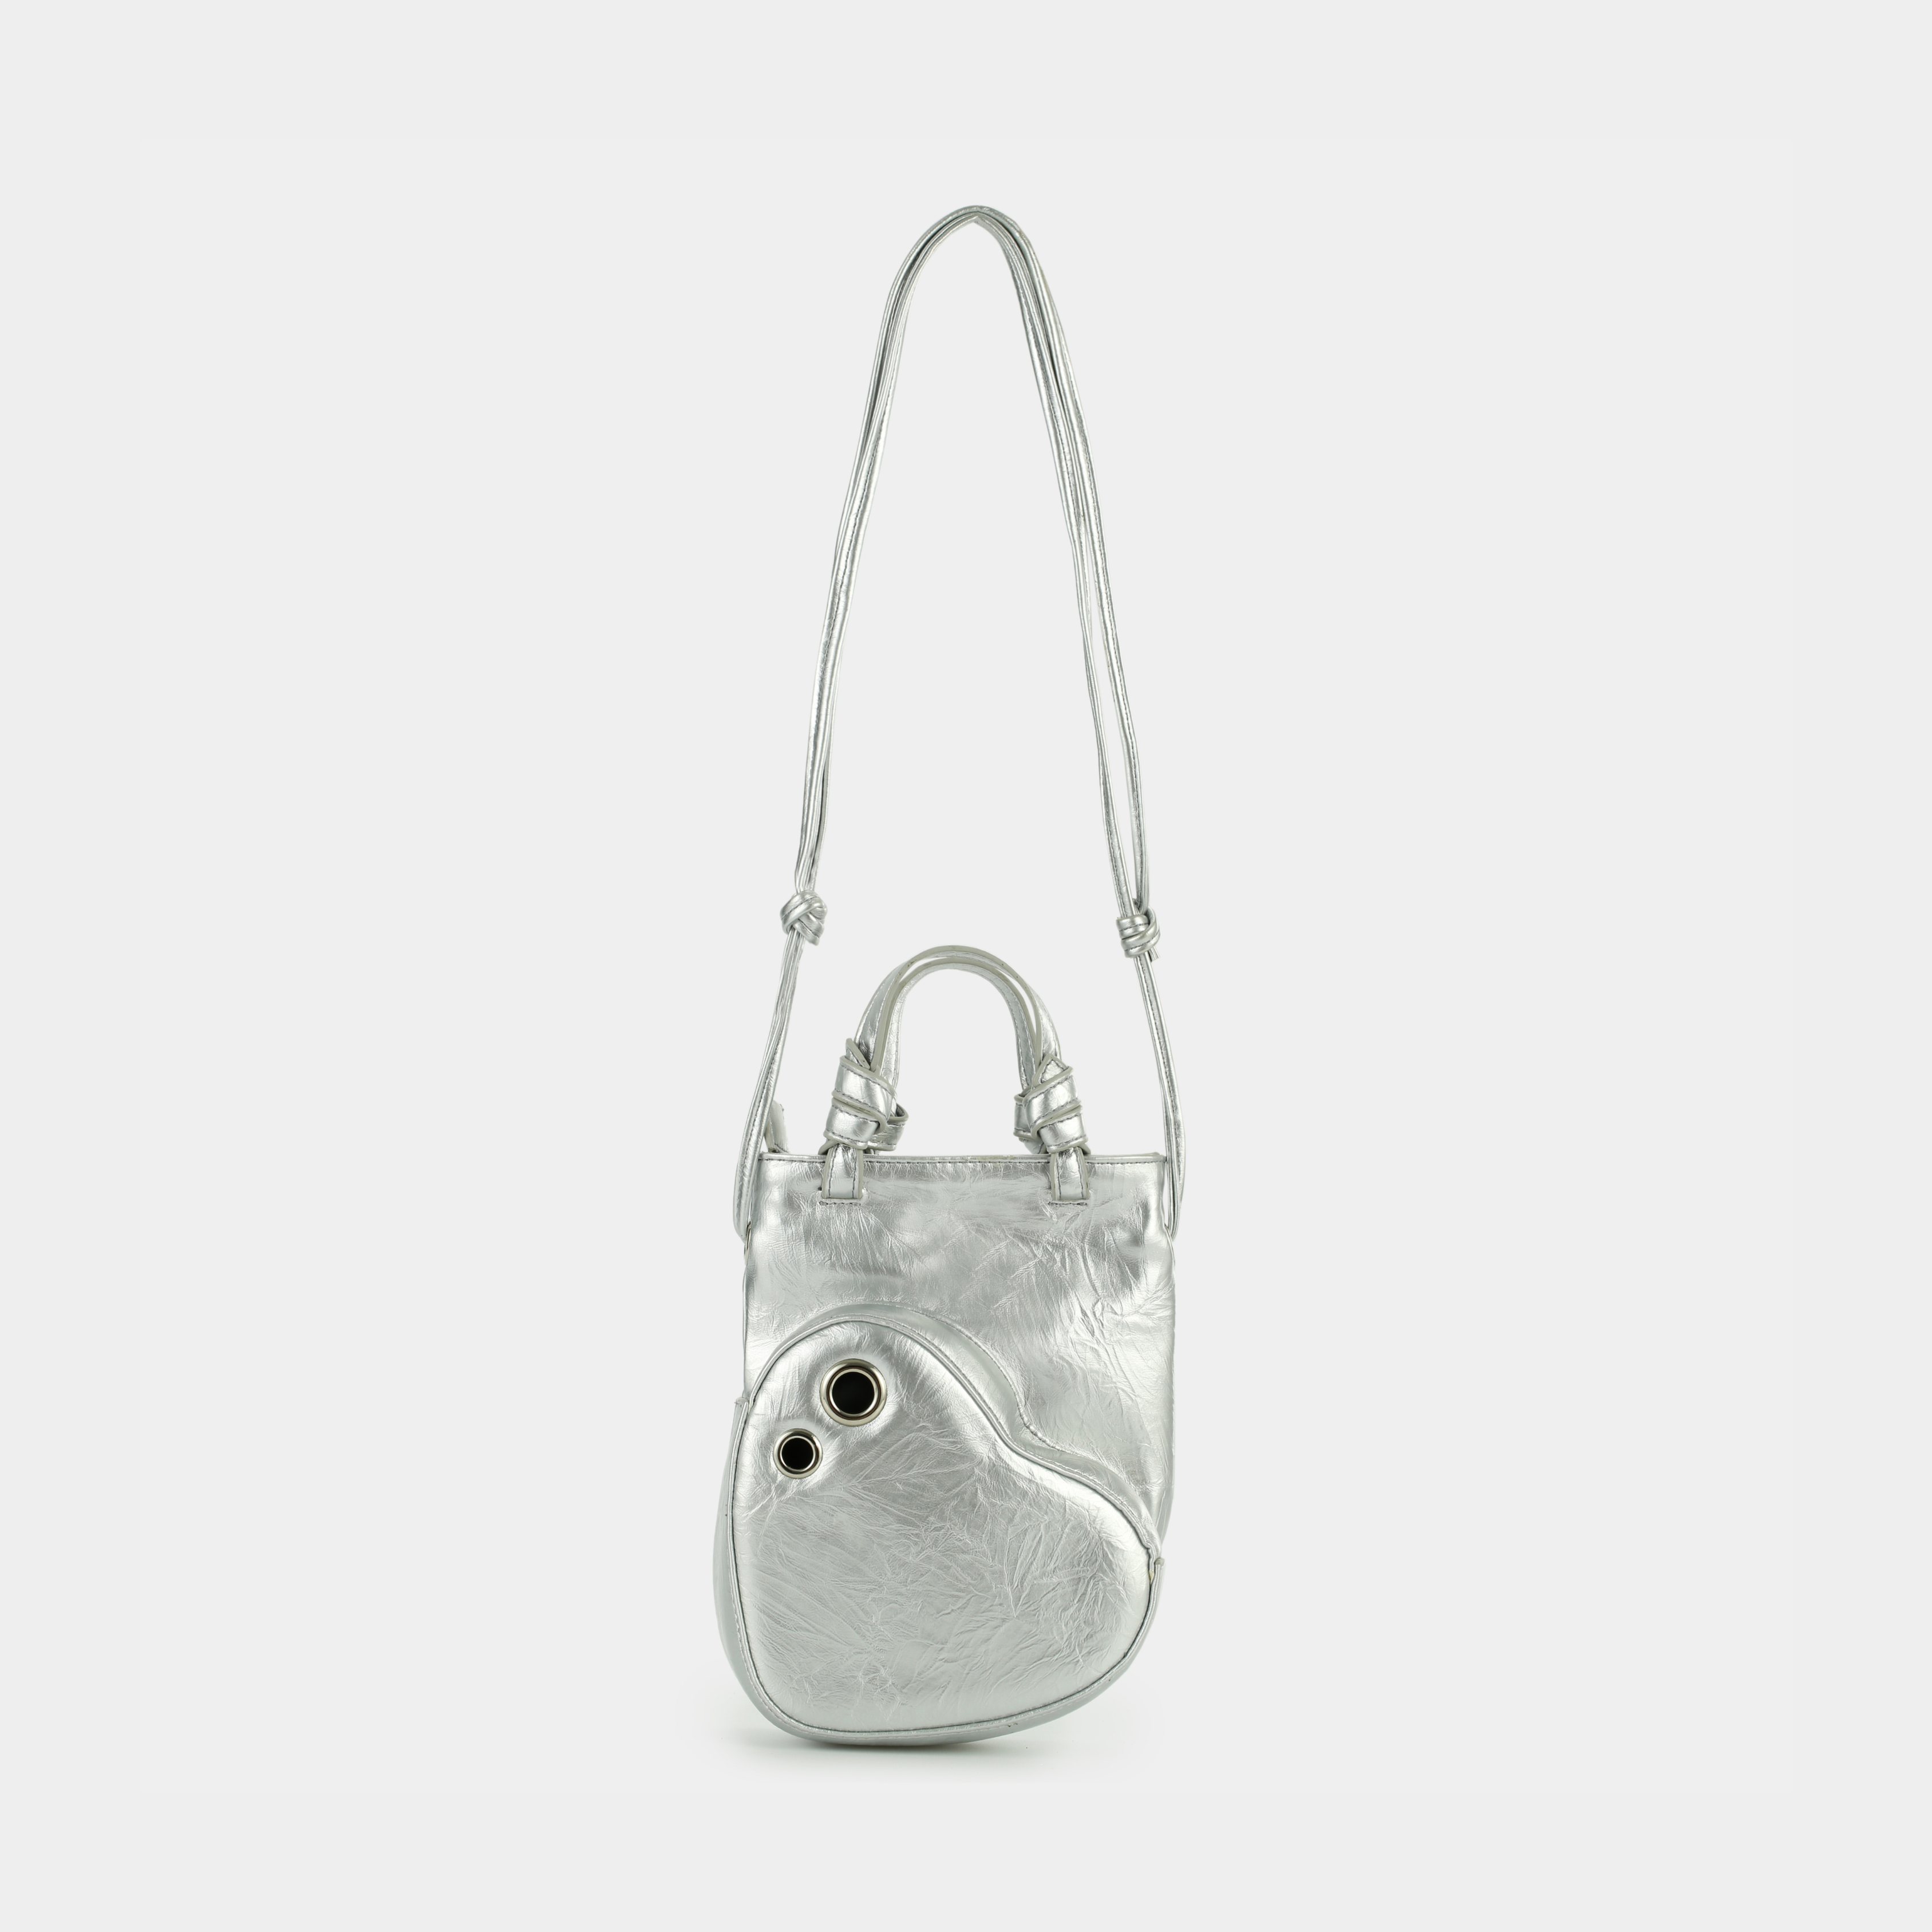 Silver Growing Heart handbag